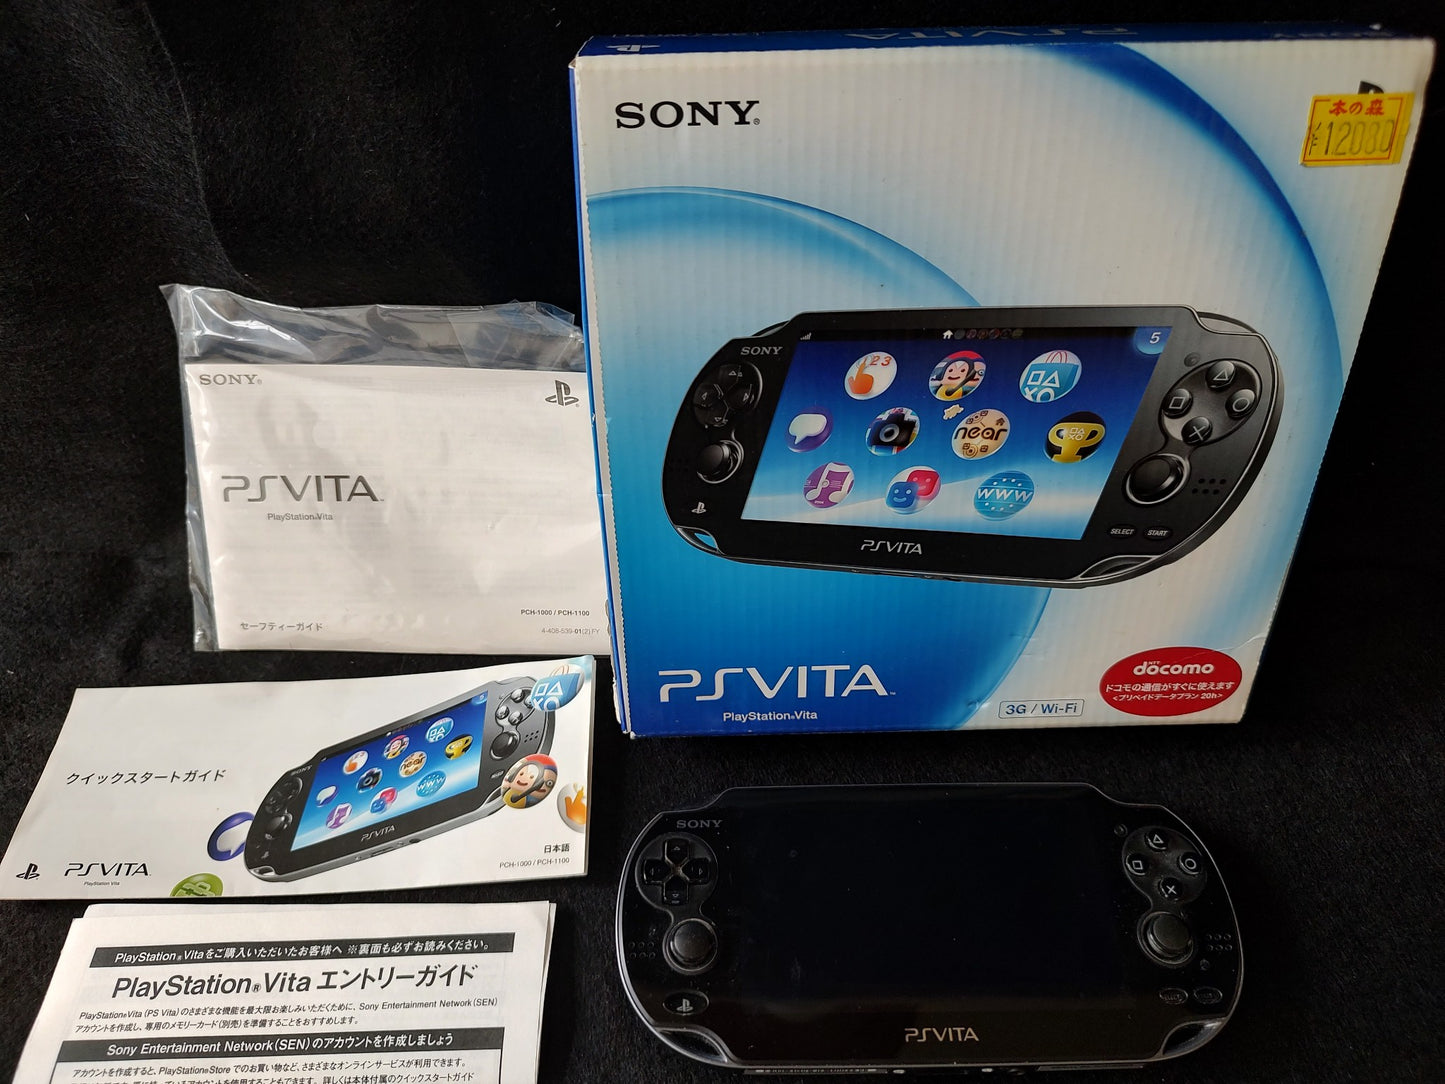 SONY PS Vita PCH-1100 Black Console, w/Manual Box set